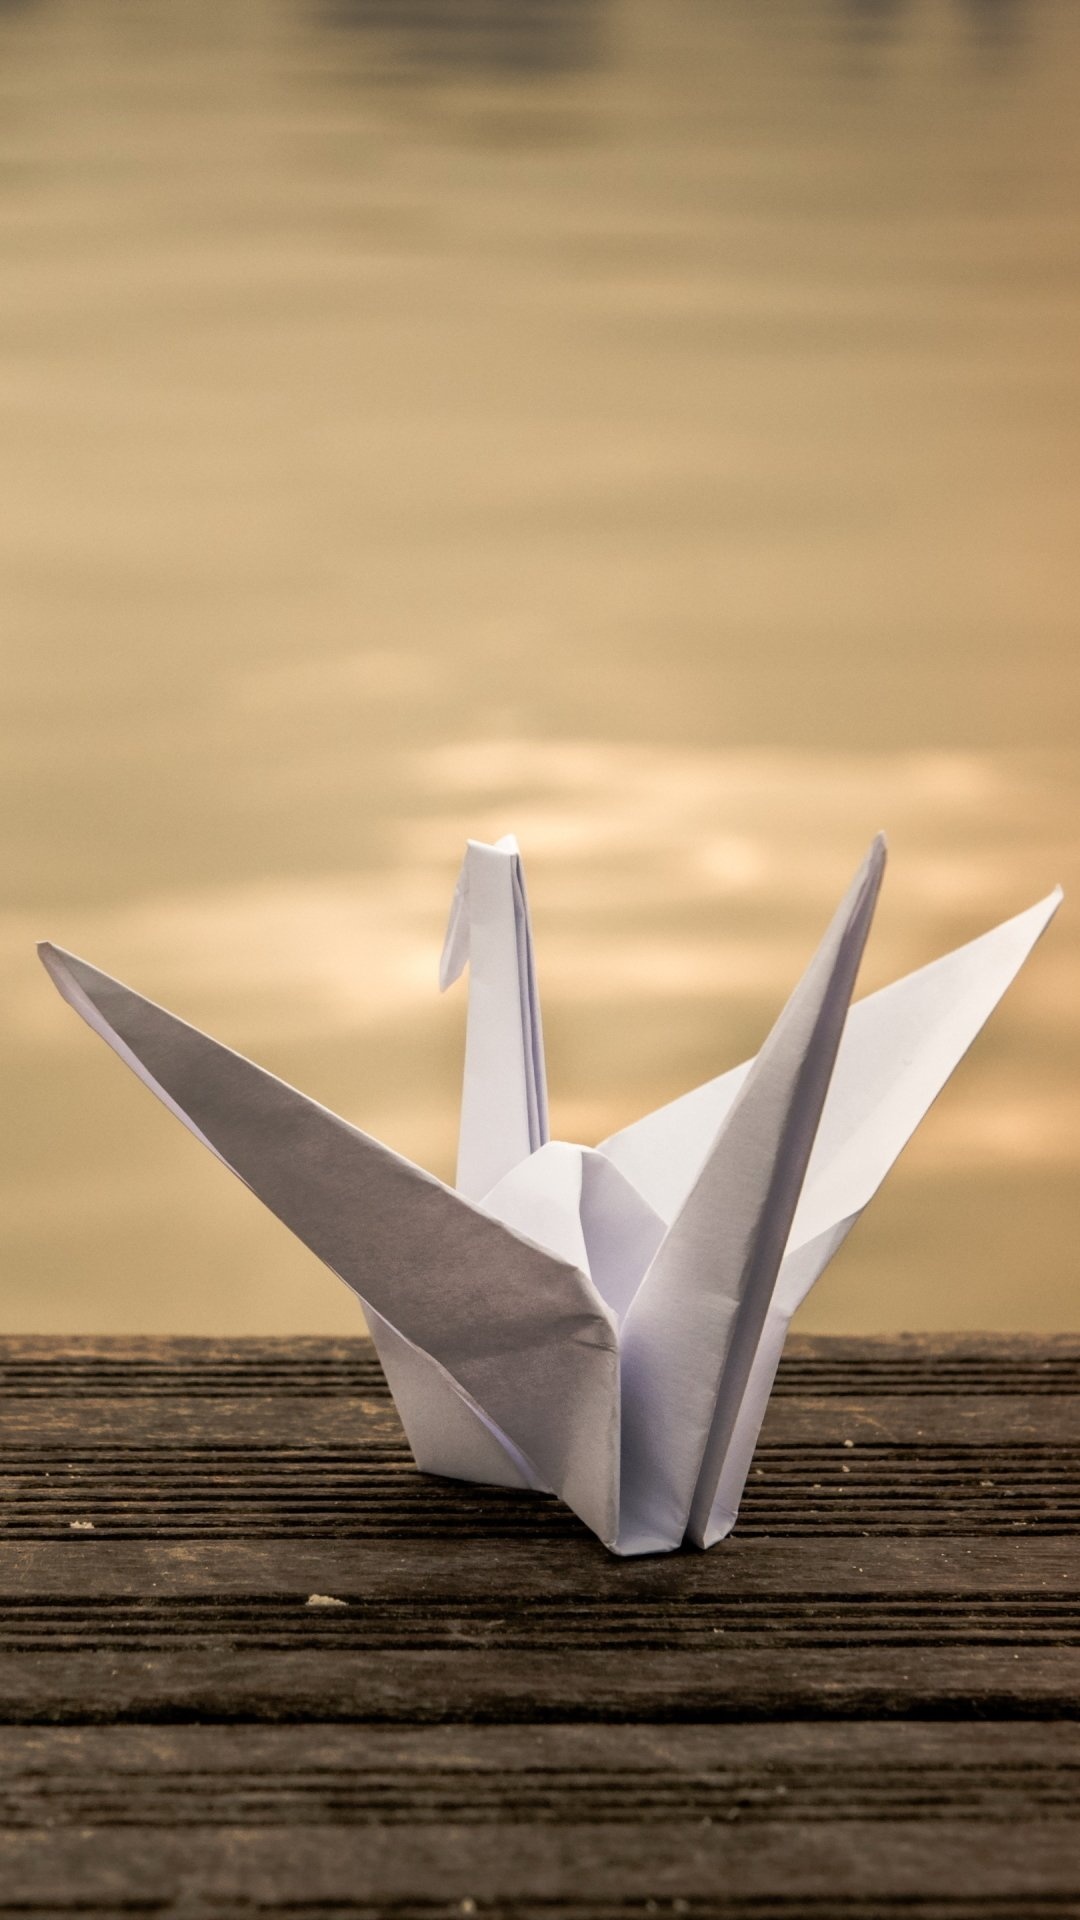 Paper Crane, Man-made art, Masterpiece of origami, Crafty creation, 1080x1920 Full HD Phone